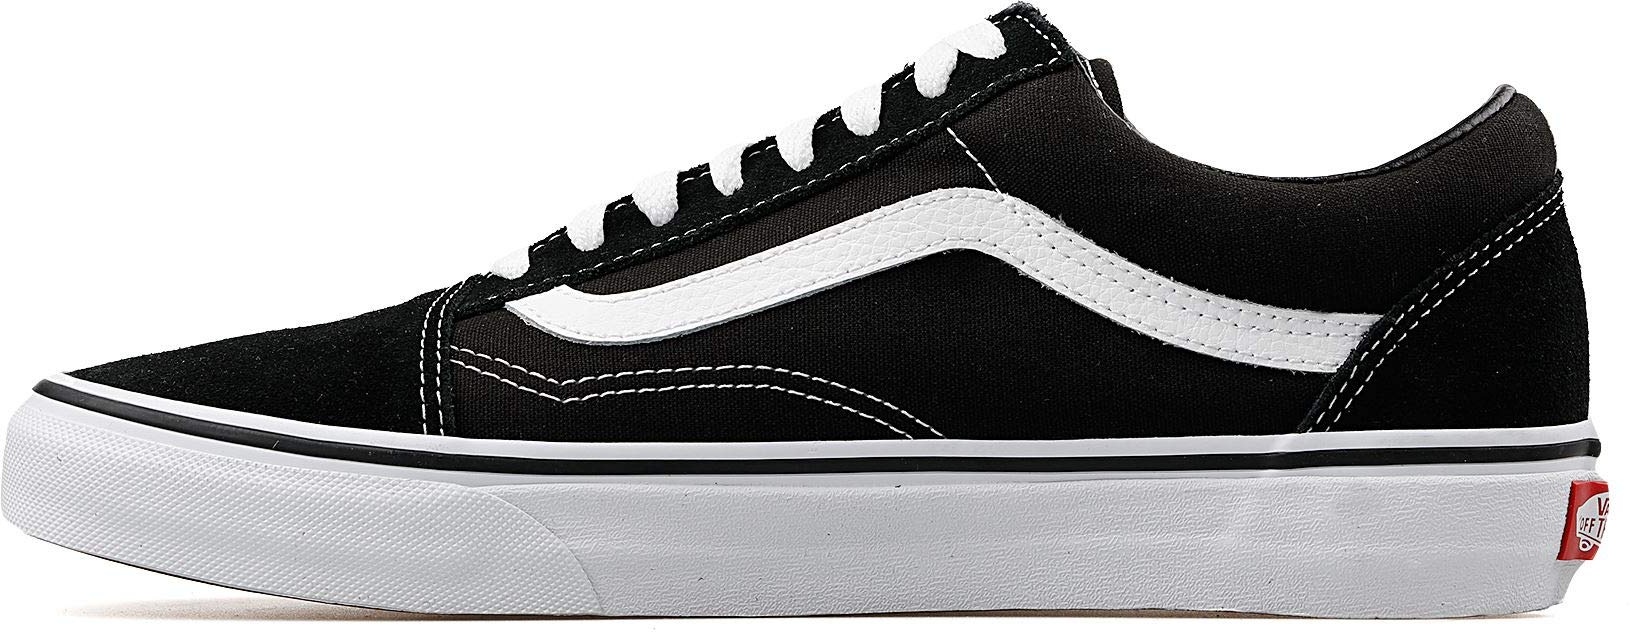 Vans Unisex Old Skool Classic Suede/Canvas Sneakers, Black White, 34.5 EU - 34.5 EU